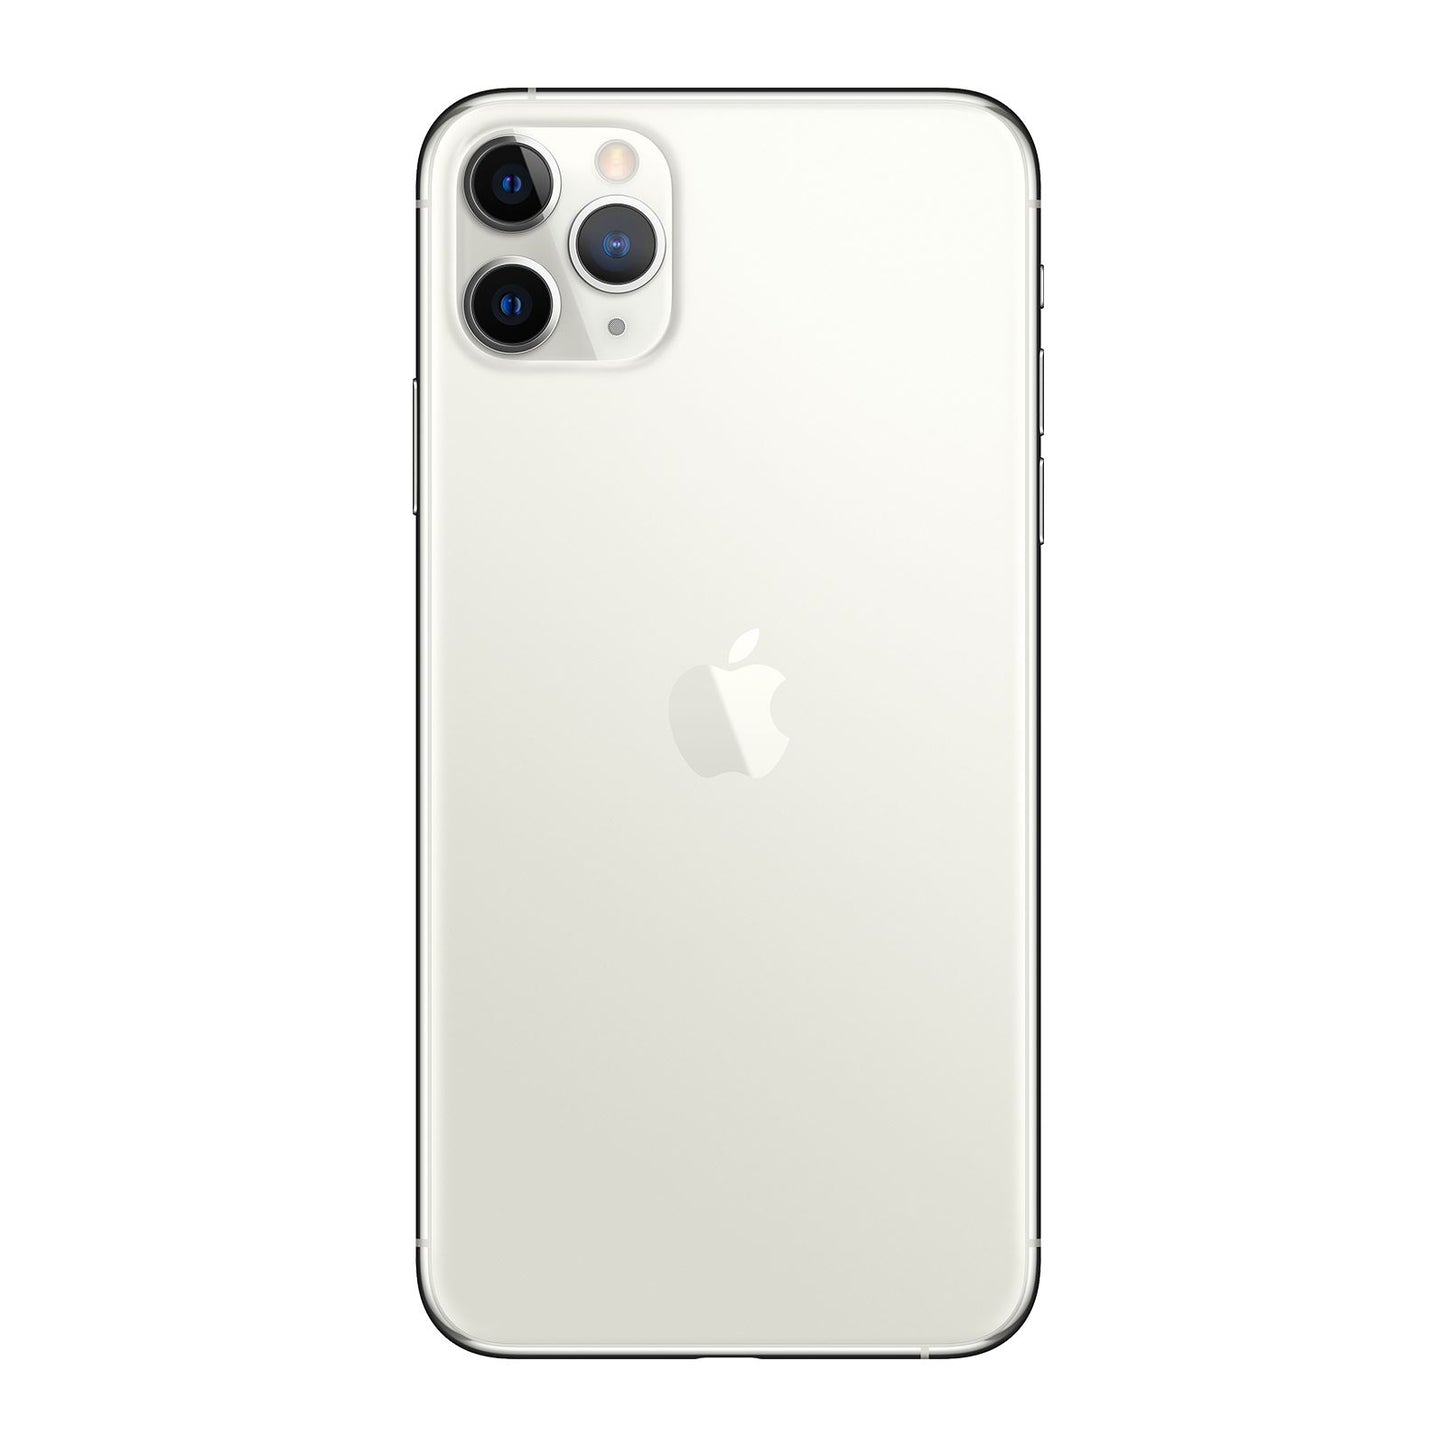 Apple iPhone 11 Pro Max 4G Smartphone Unlocked 64-256-512GB